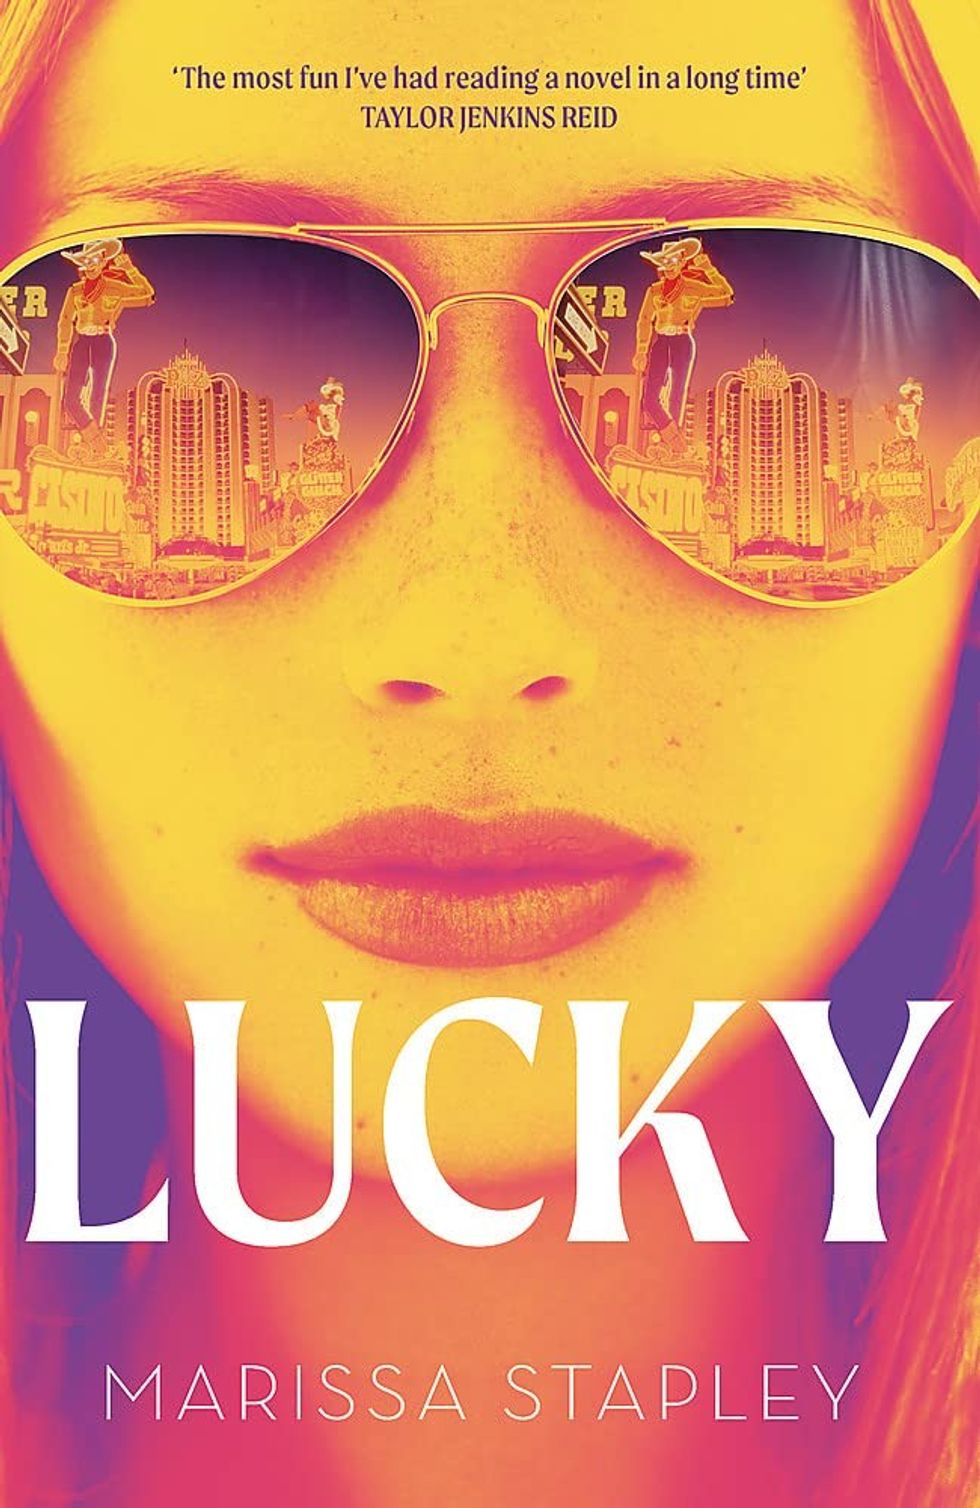 "Lucky" by Marissa Stapley